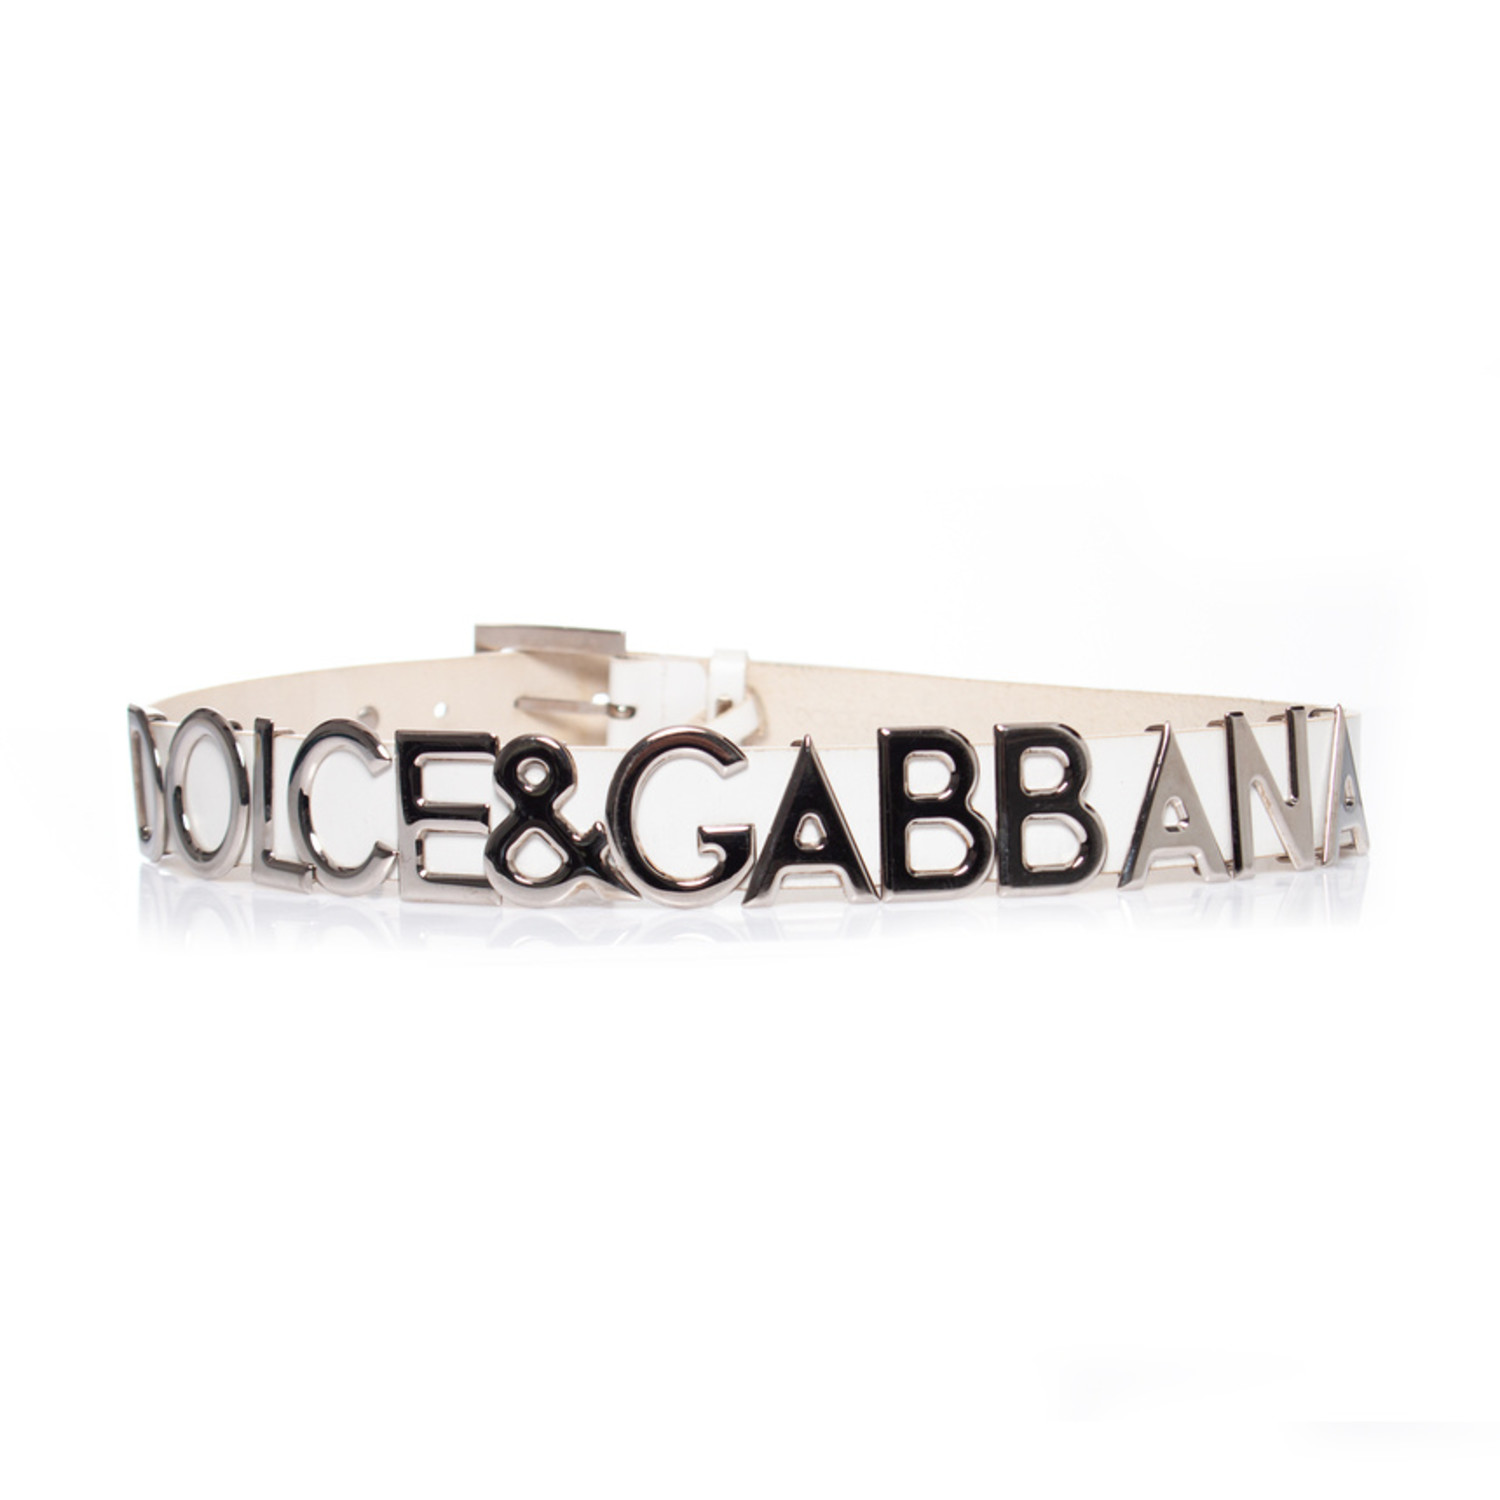 Disco bom Trolley Dolce & Gabbana, riem met zilveren letters. - Unique Designer Pieces